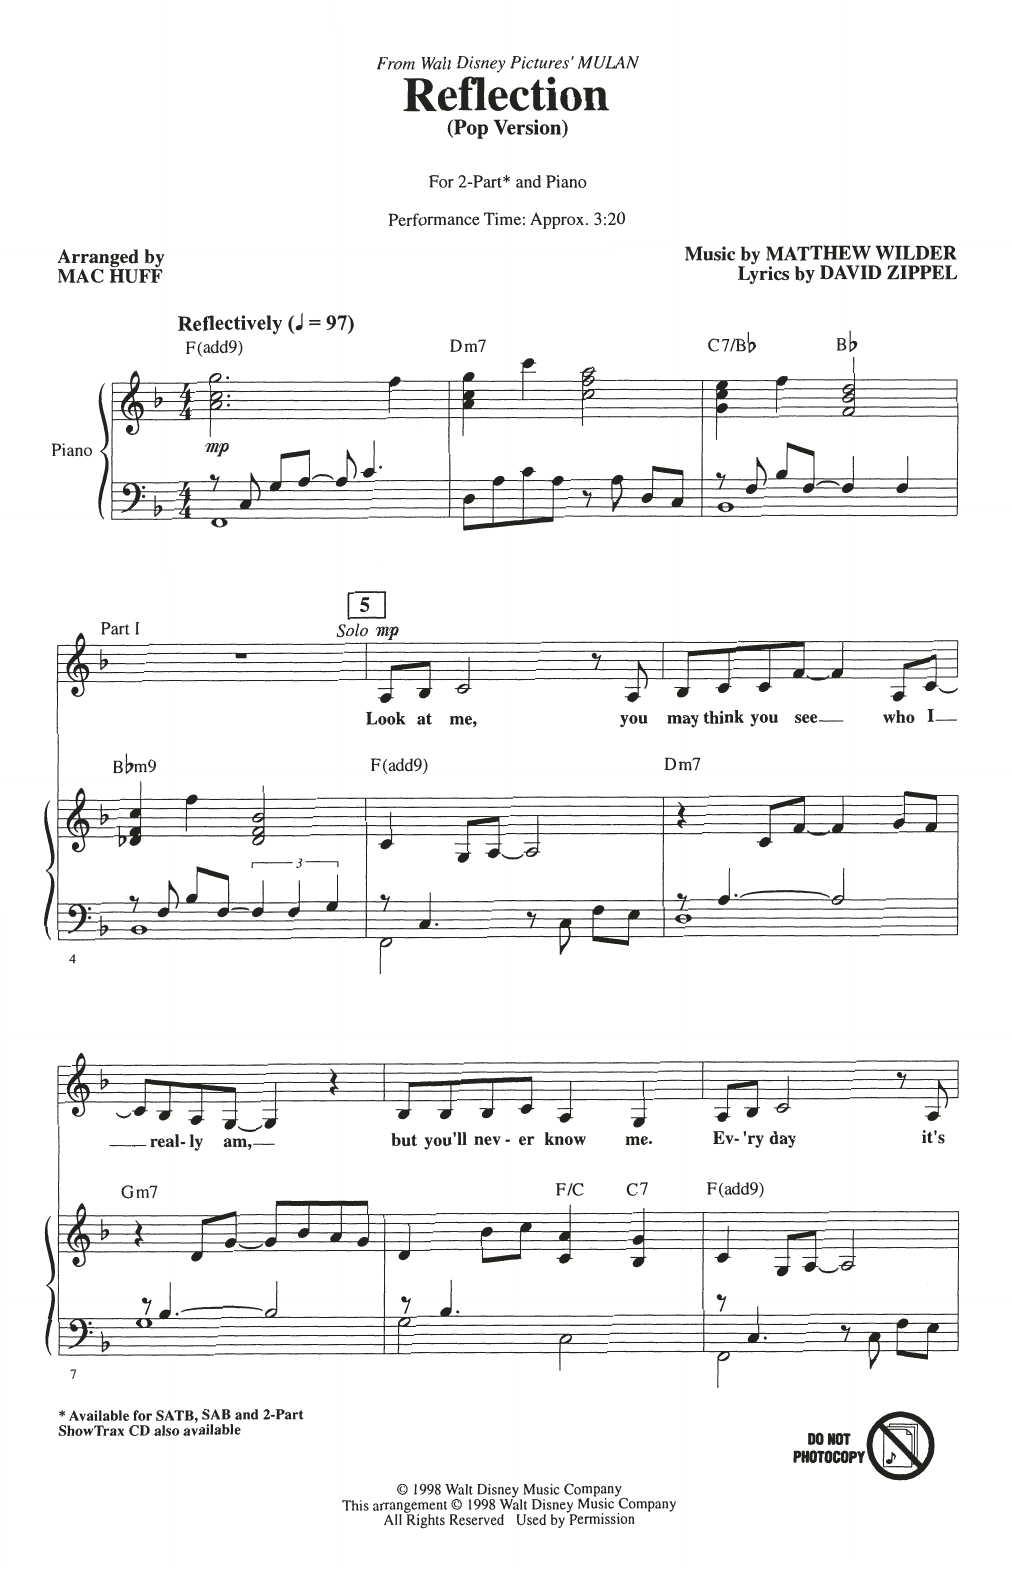 Christina Aguilera Reflection (Pop Version) (from Mulan) (arr. Mac Huff) Sheet Music Notes & Chords for SAB Choir - Download or Print PDF